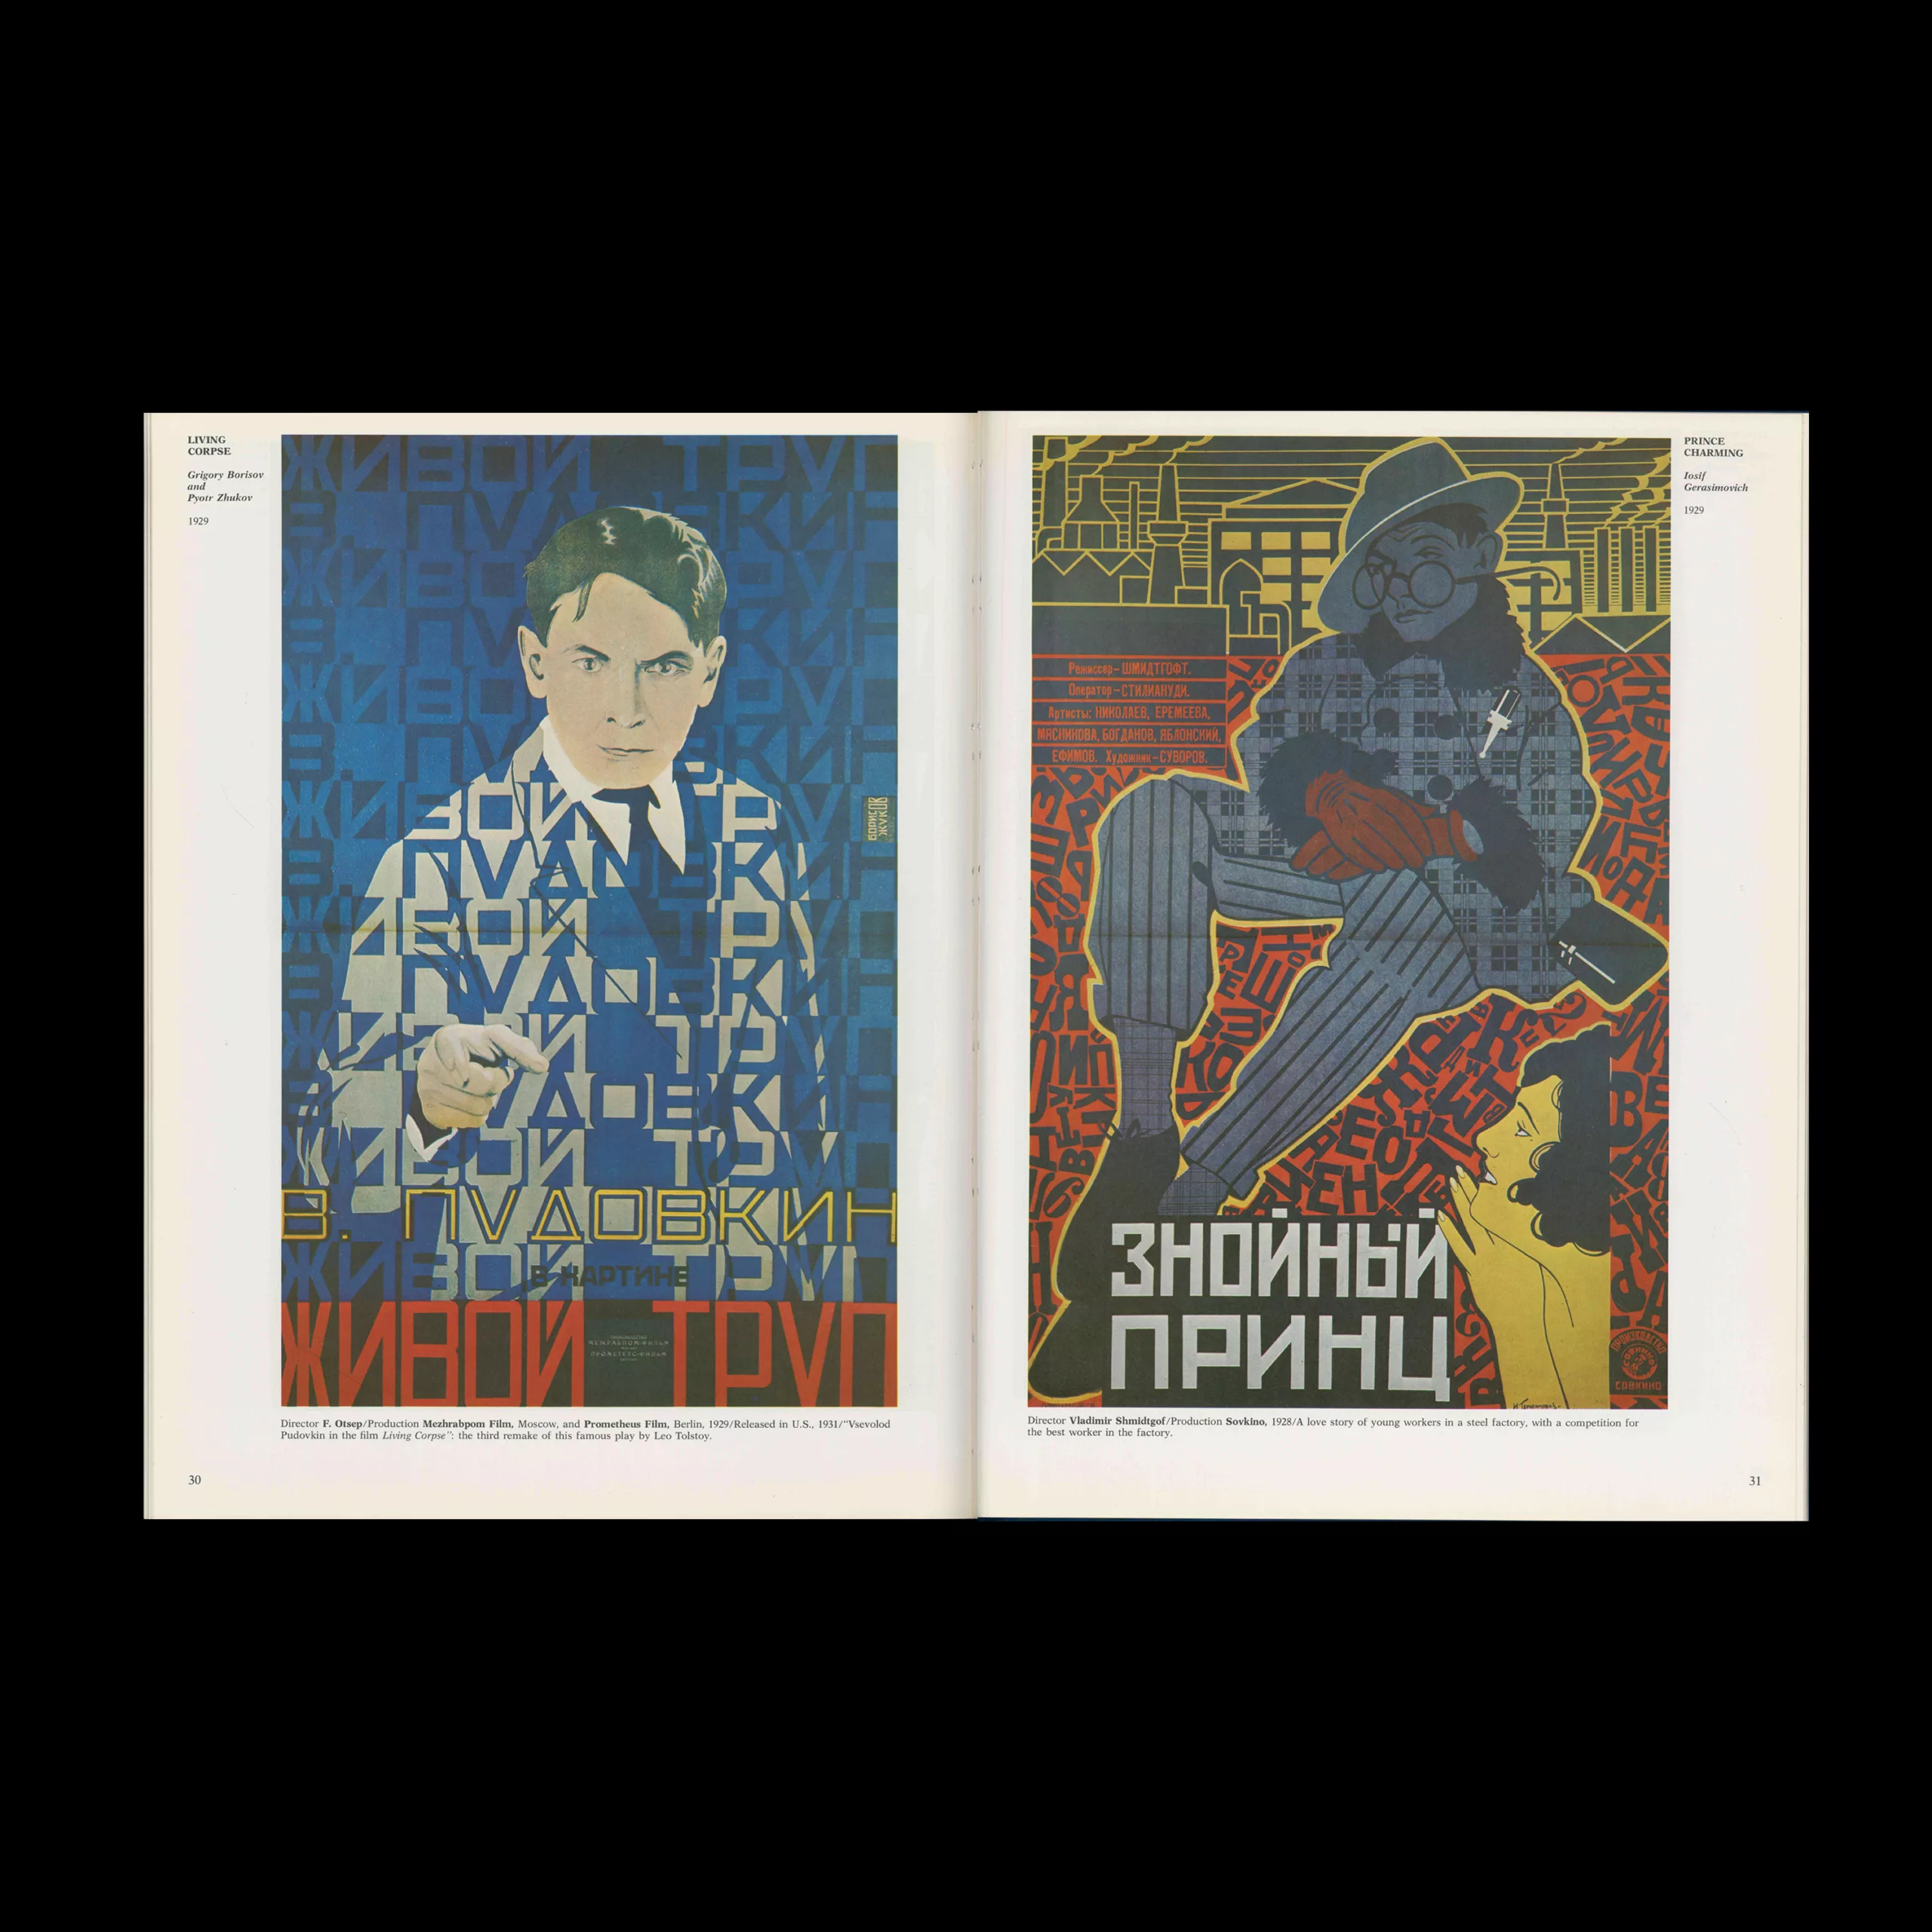 Revolutionary Soviet Film Posters, Johns Hopkins University Press, 1974